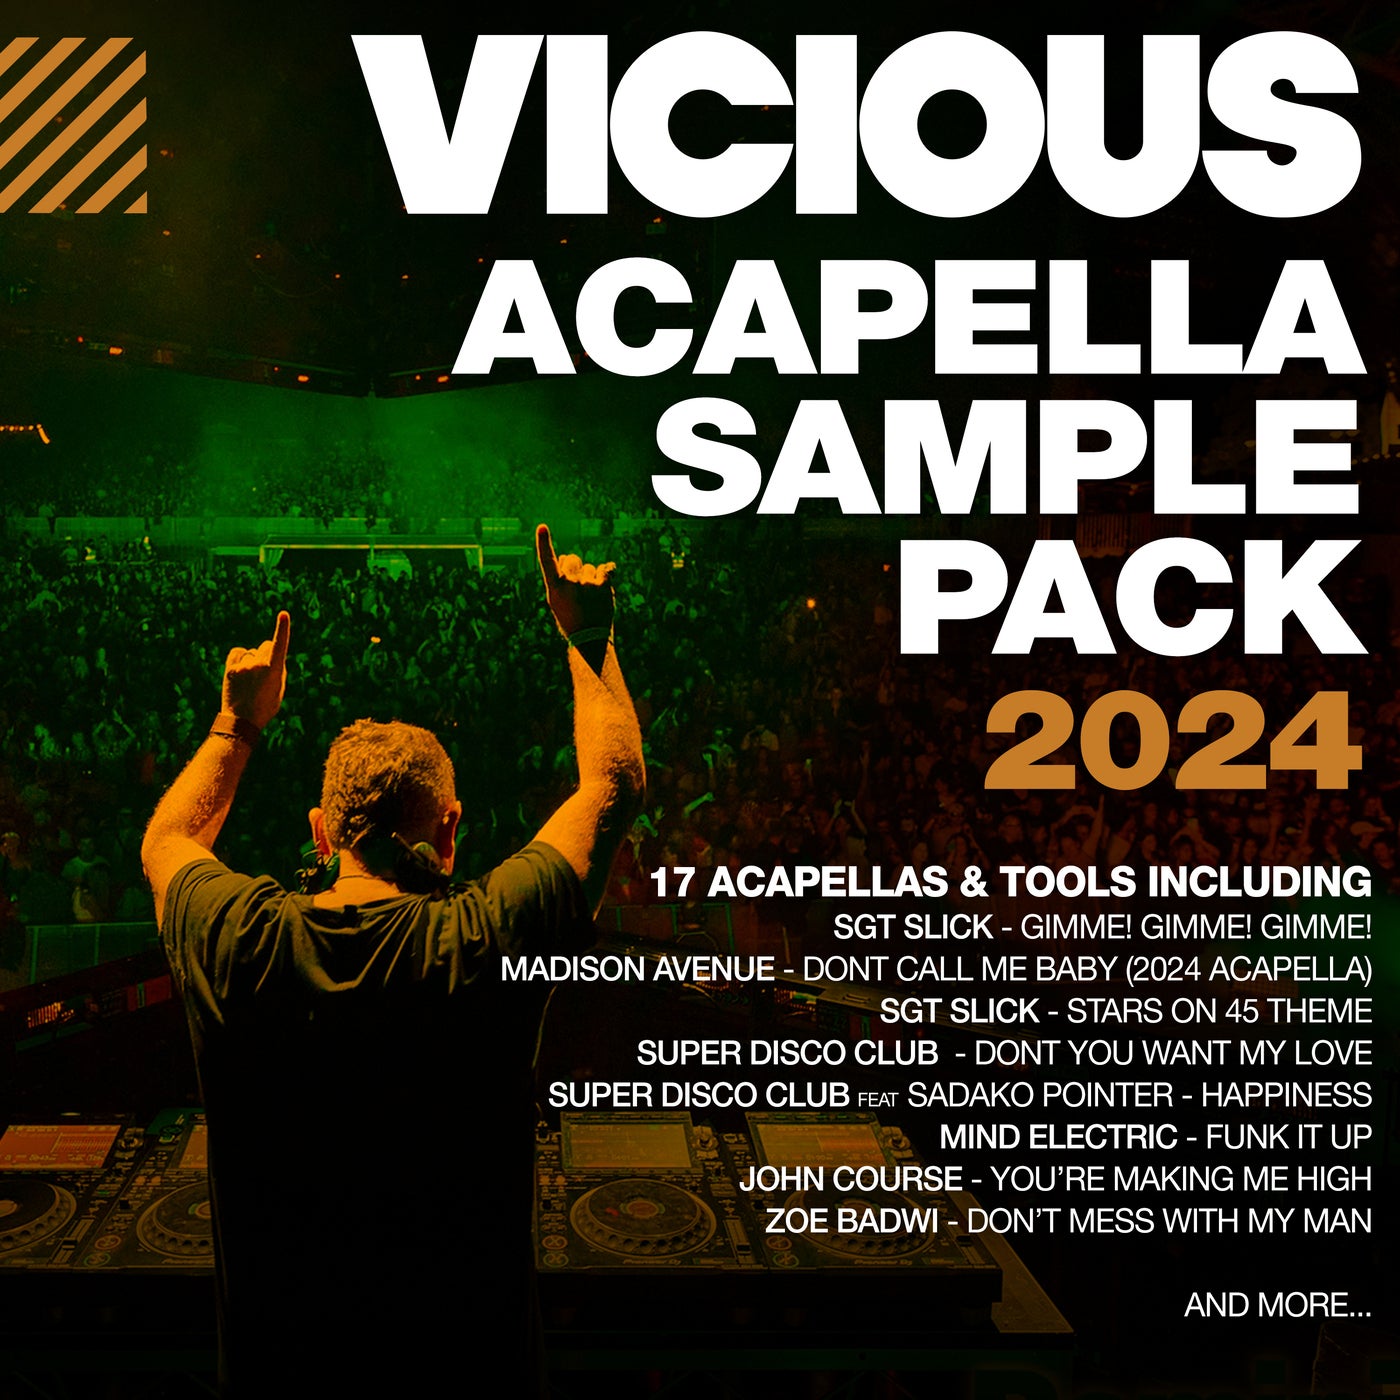 Vicious Acapella Sample Pack 2024